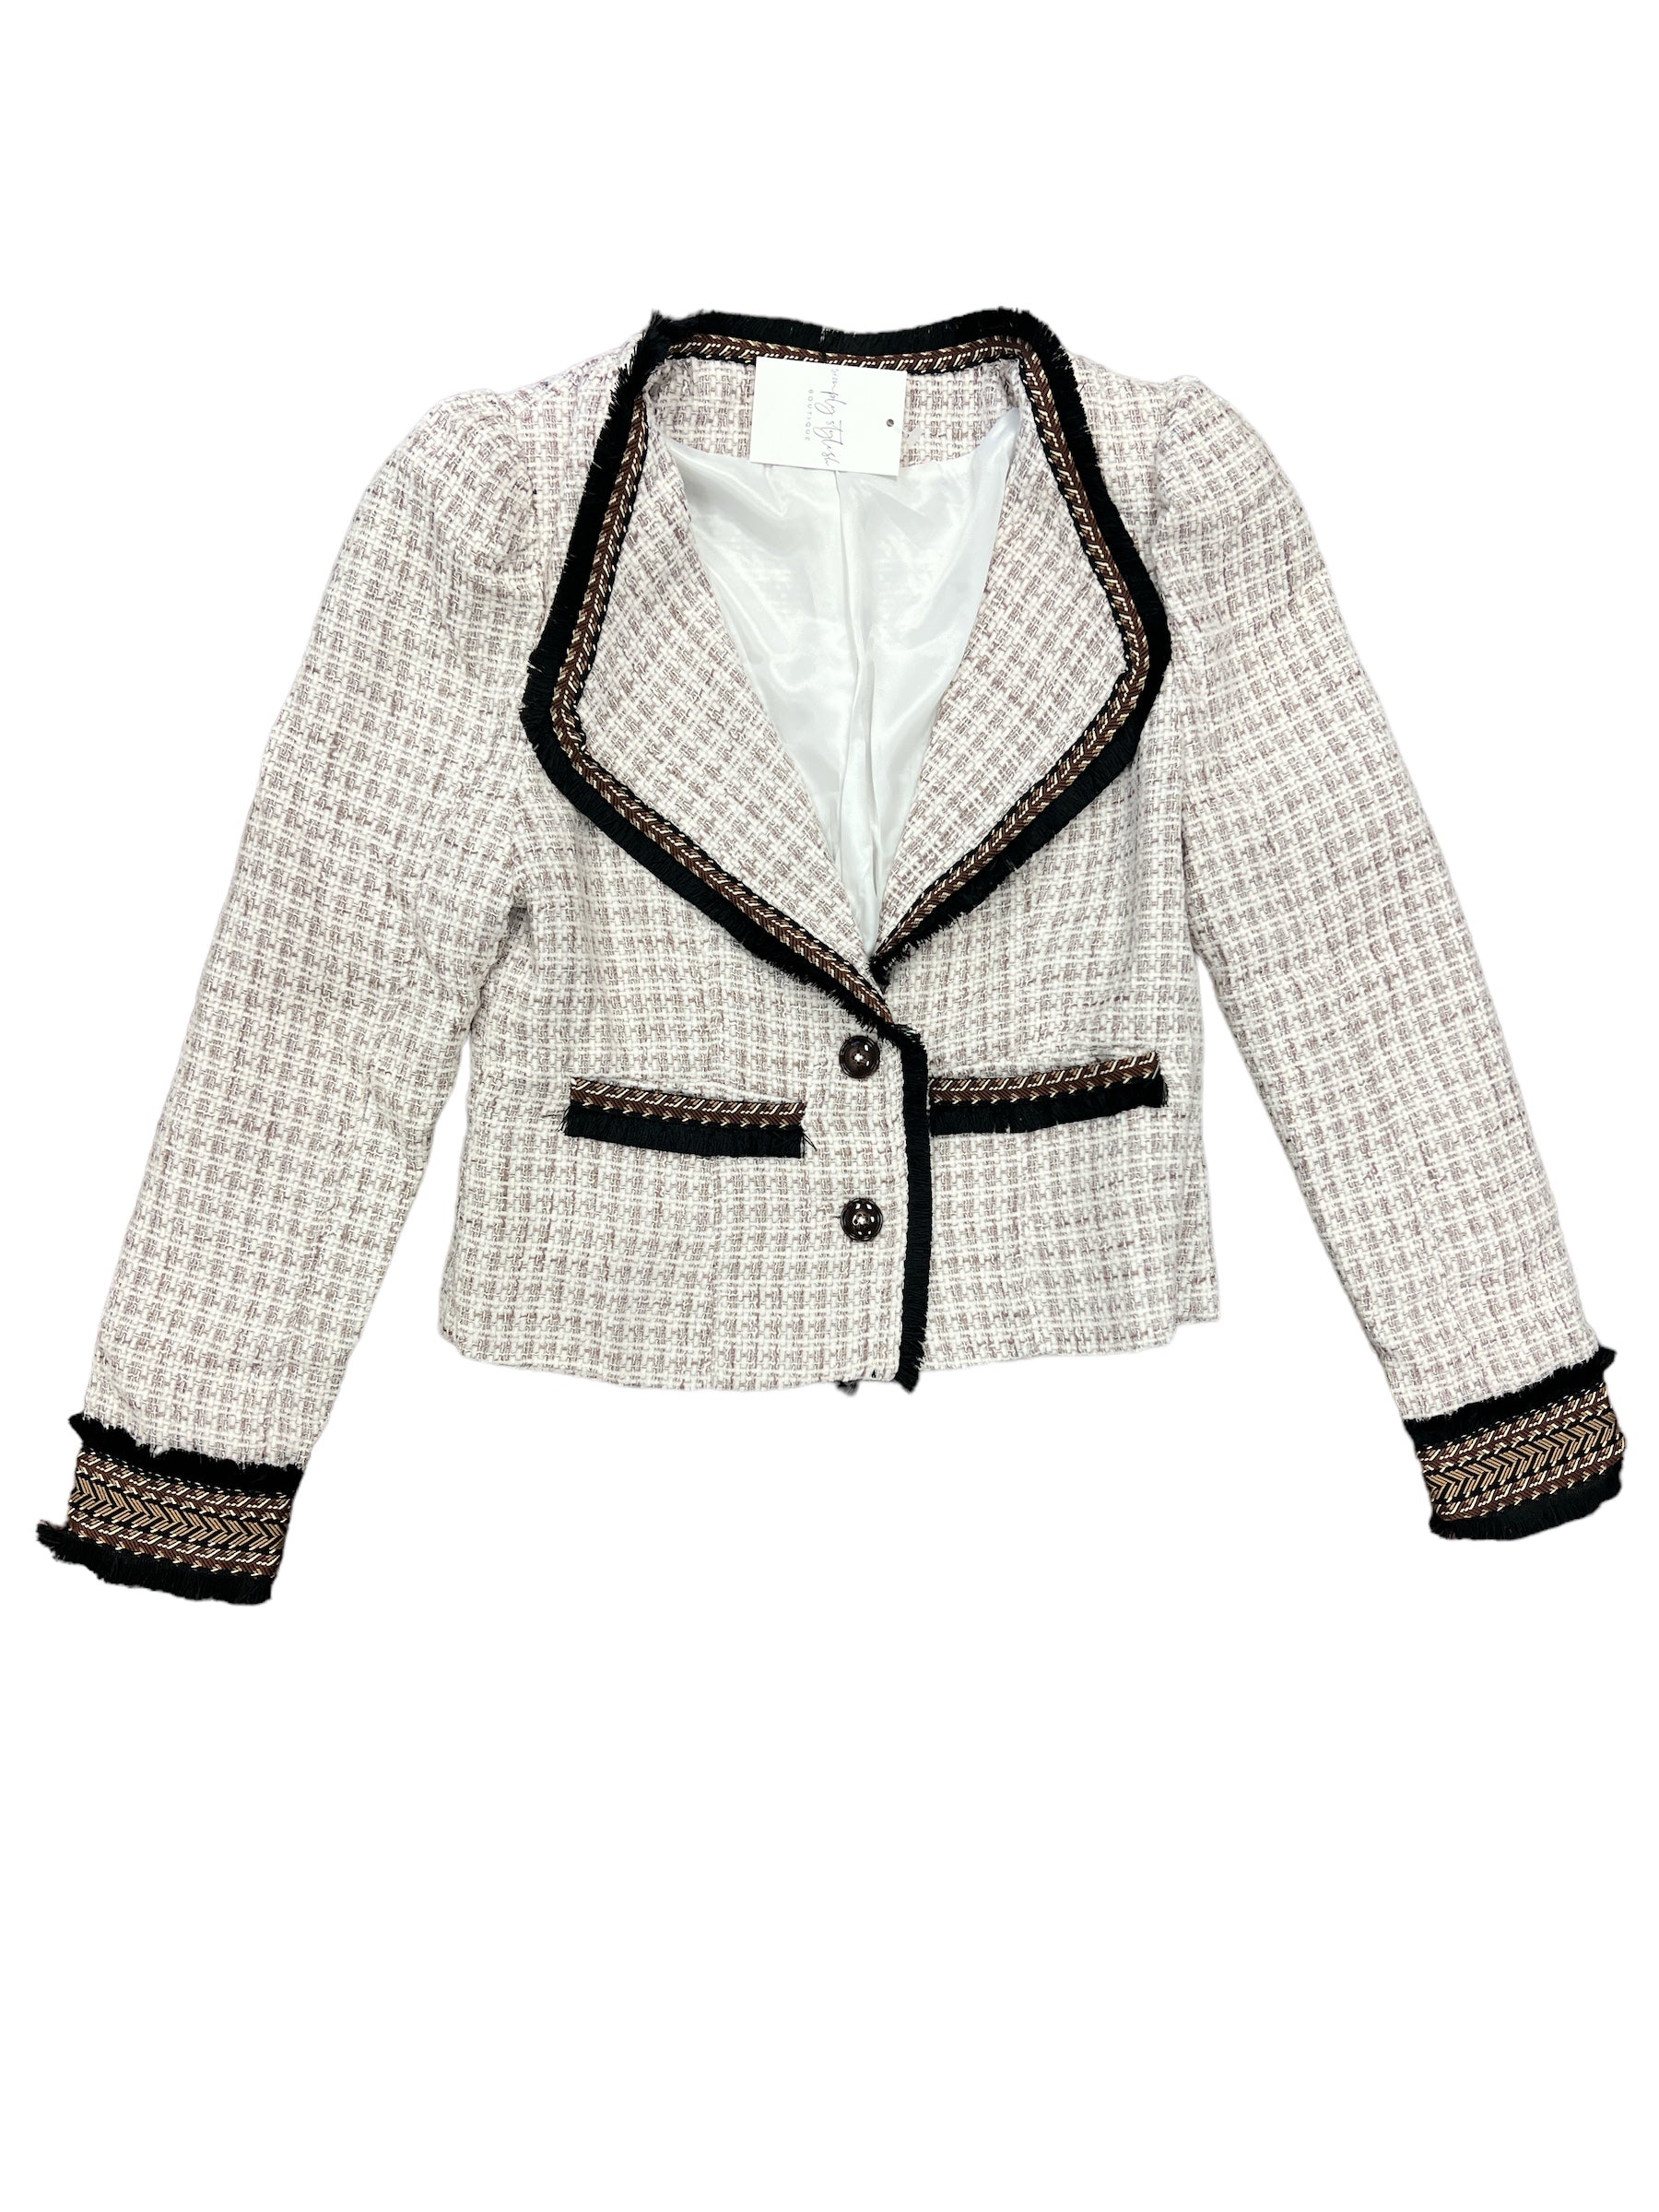 Eva Jacket-150 Jackets, Blazers, & Outerwear-Simply Stylish Boutique-Simply Stylish Boutique | Women’s & Kid’s Fashion | Paducah, KY